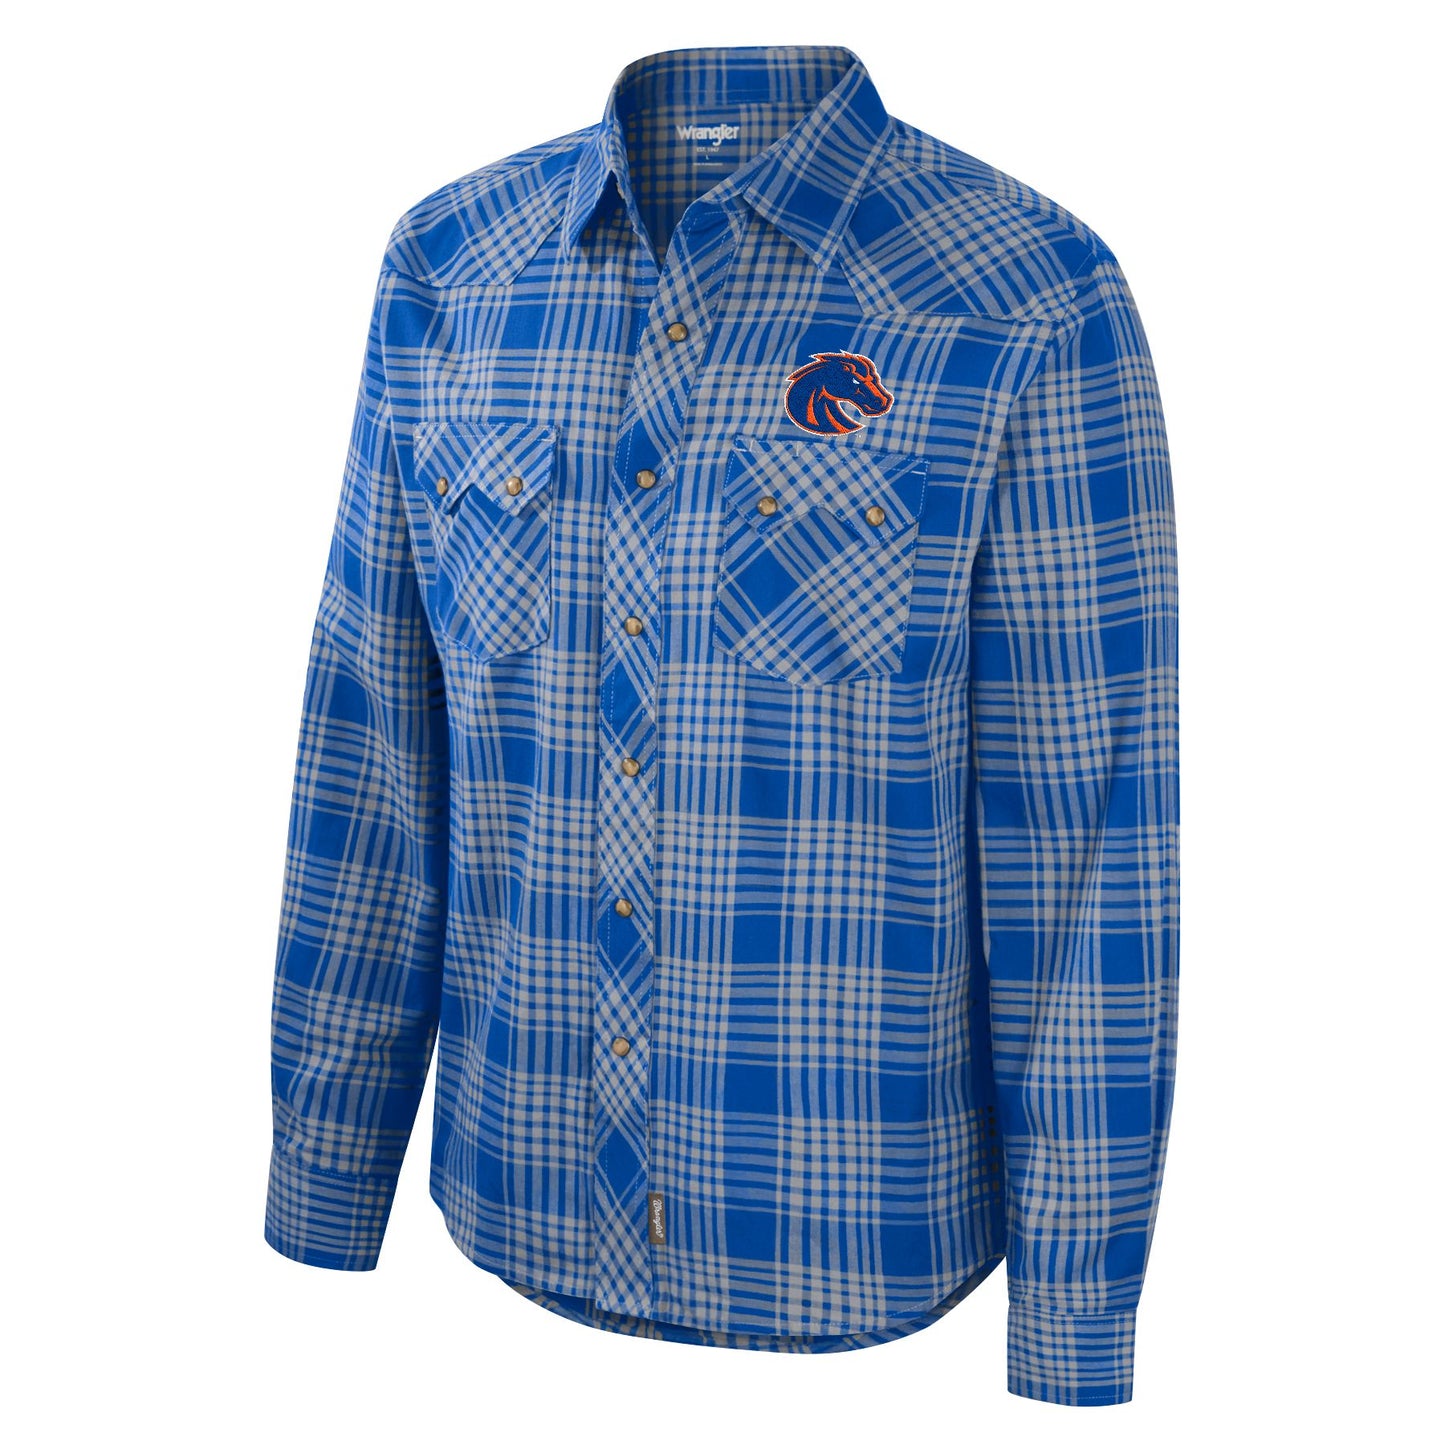 Boise State Broncos Wrangler Men's Plaid Long Sleeve Snap Up Shirt (Blue)